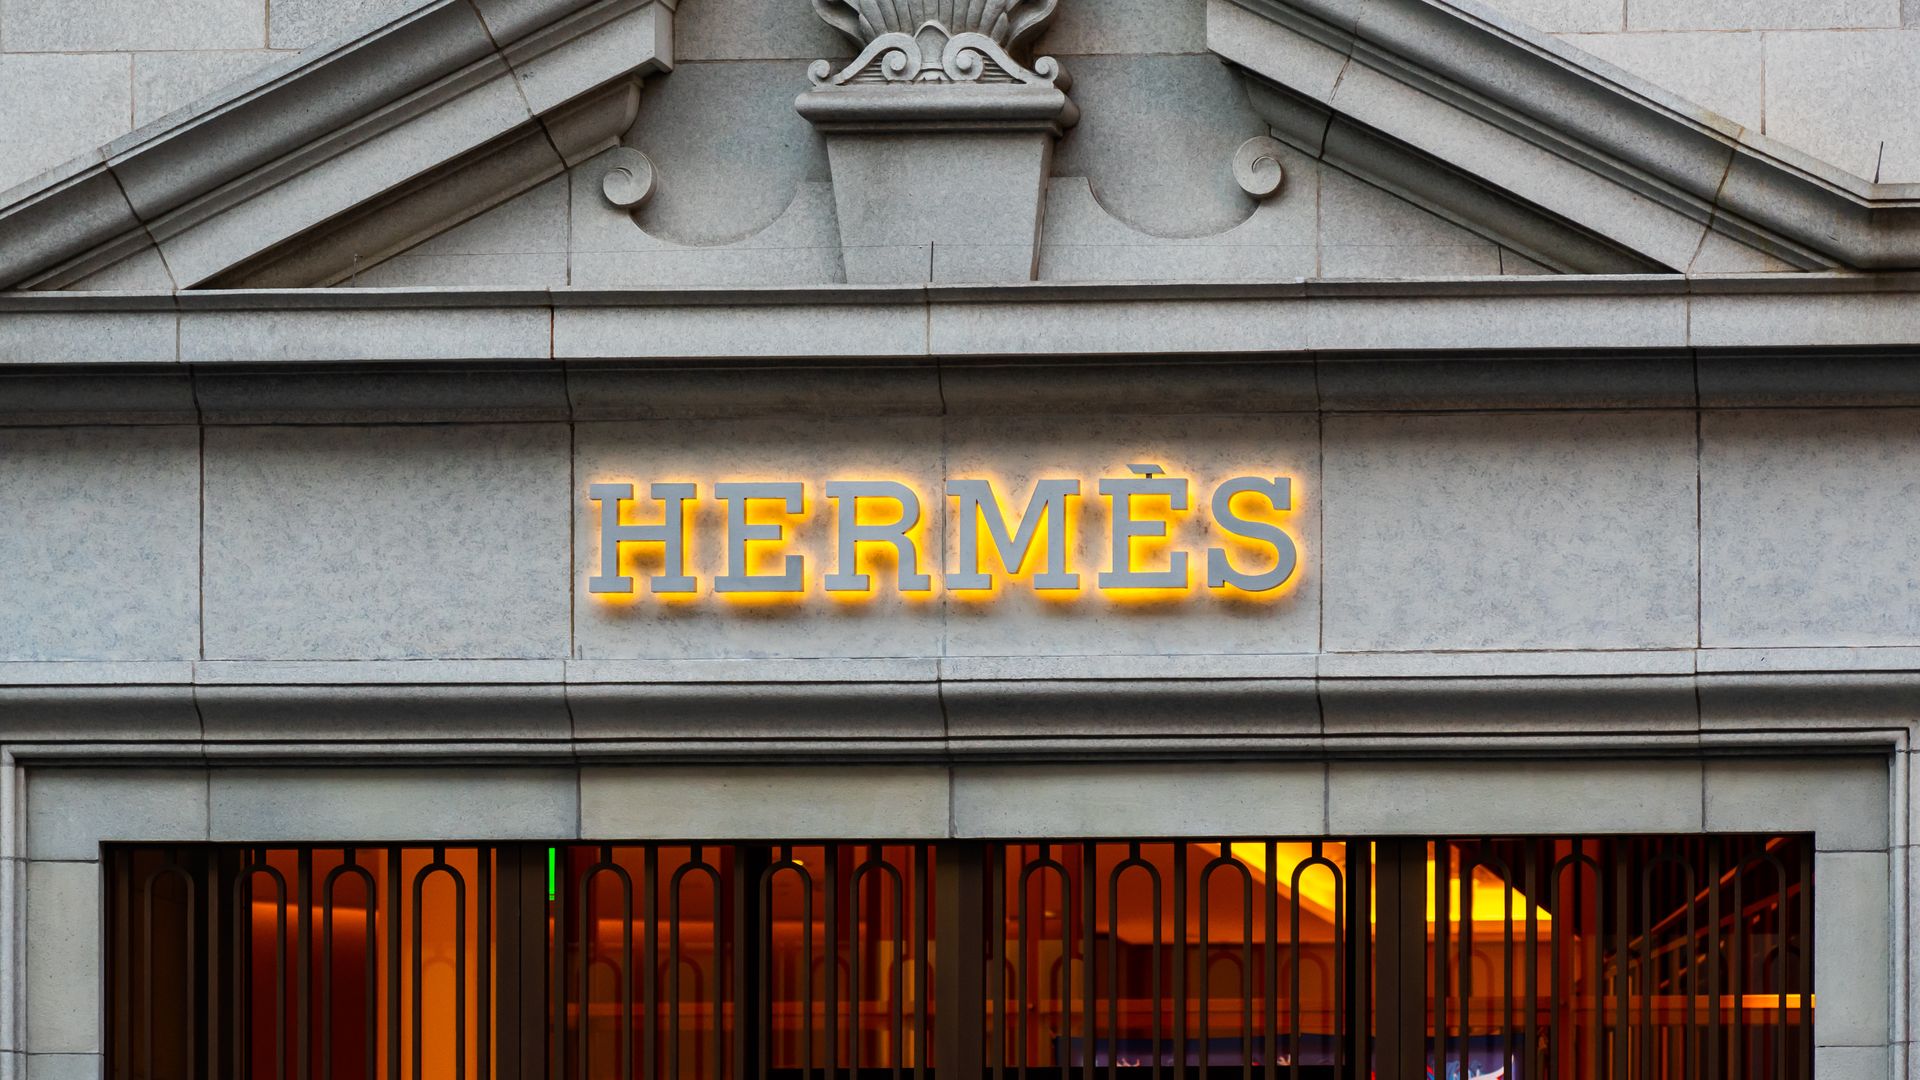 hermes storefront